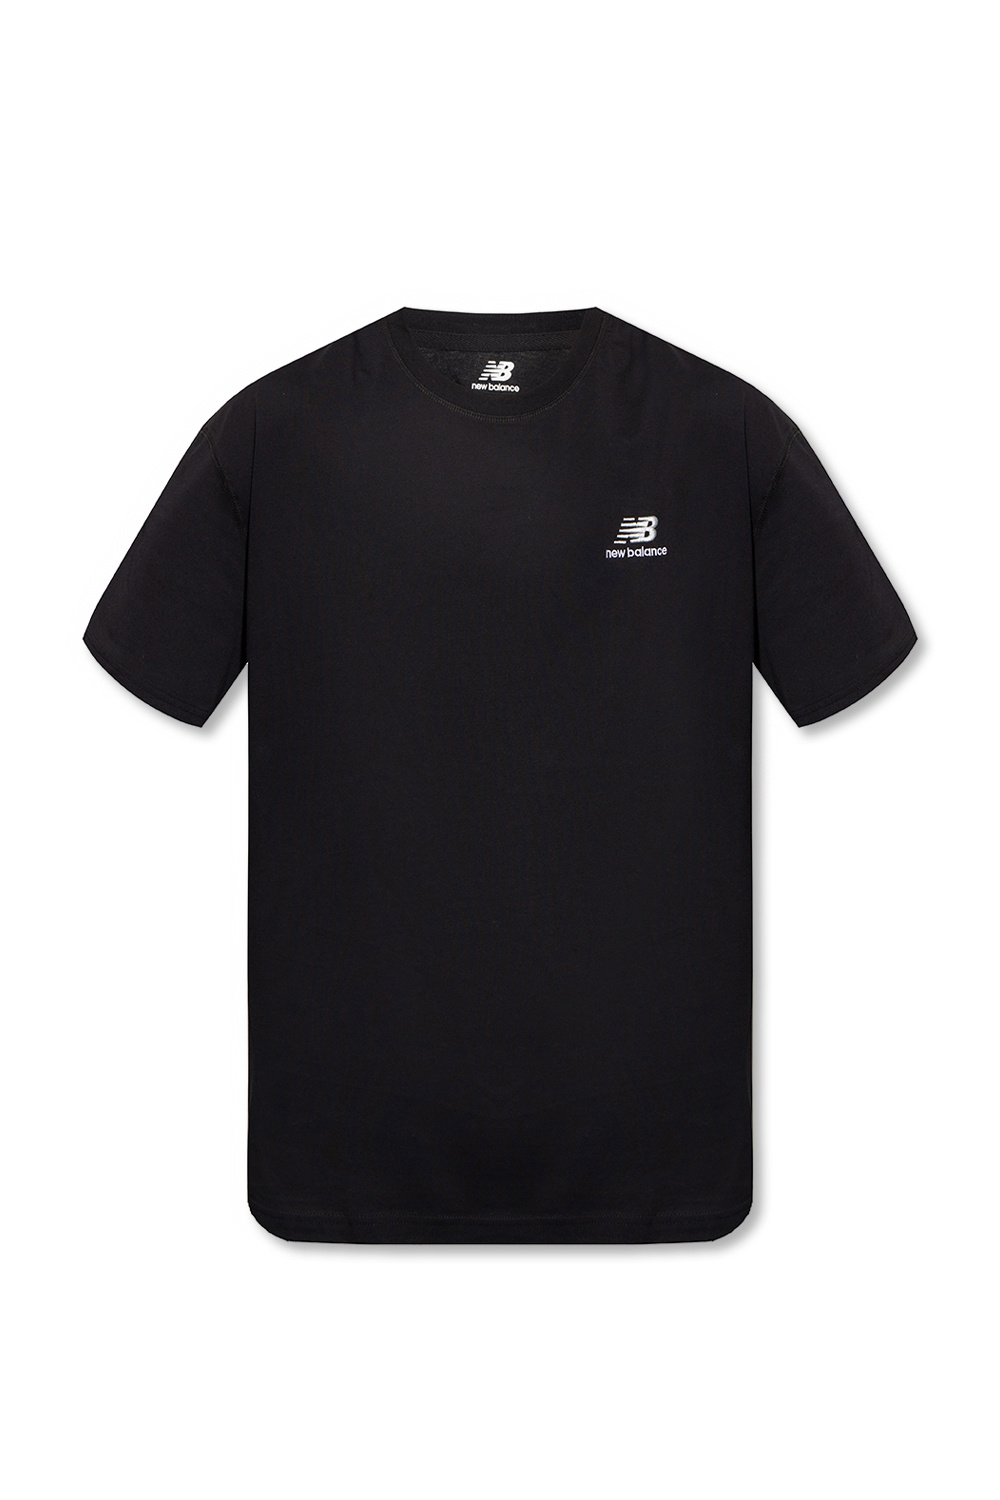 fitting Clothing | - Relaxed Balance New Manches - T-shirt | Caractéristiques T New IetpShops Printed Men\'s ImpacRun balance Sans Hybrid - shirt